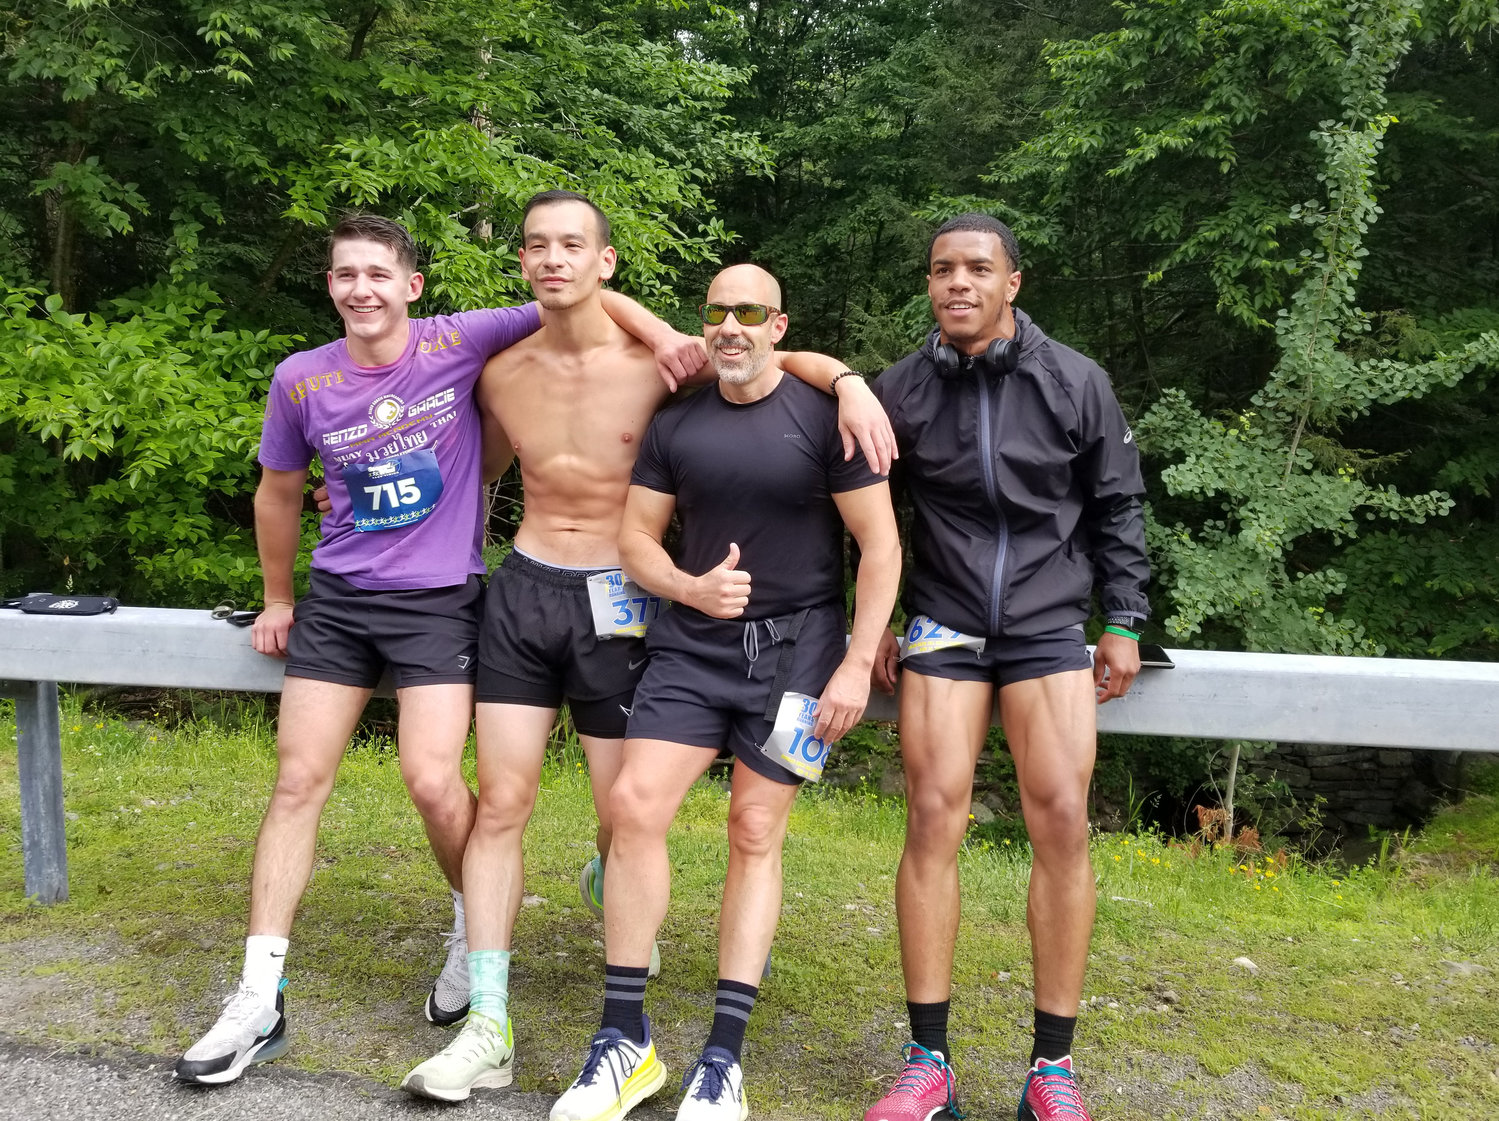 (From left) Michael Cubillas, Matt Sze, Brian Miros, and Yiovanni Fields ran the 5K as a group.